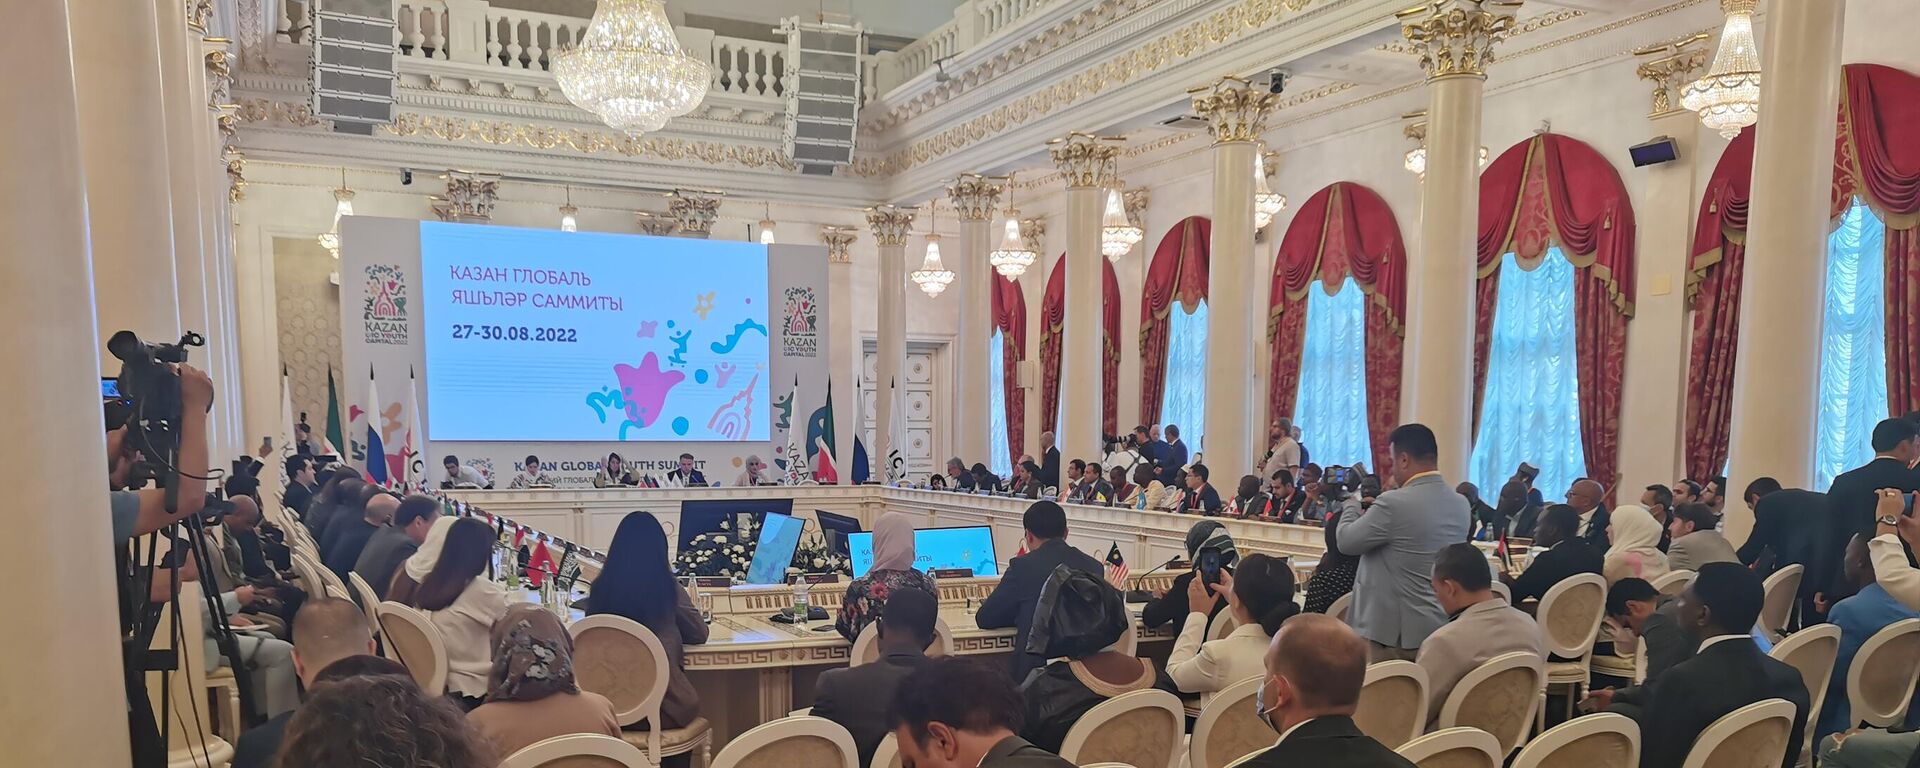 Kazan Global Youth Summit 2022 - Sputnik International, 1920, 28.08.2022